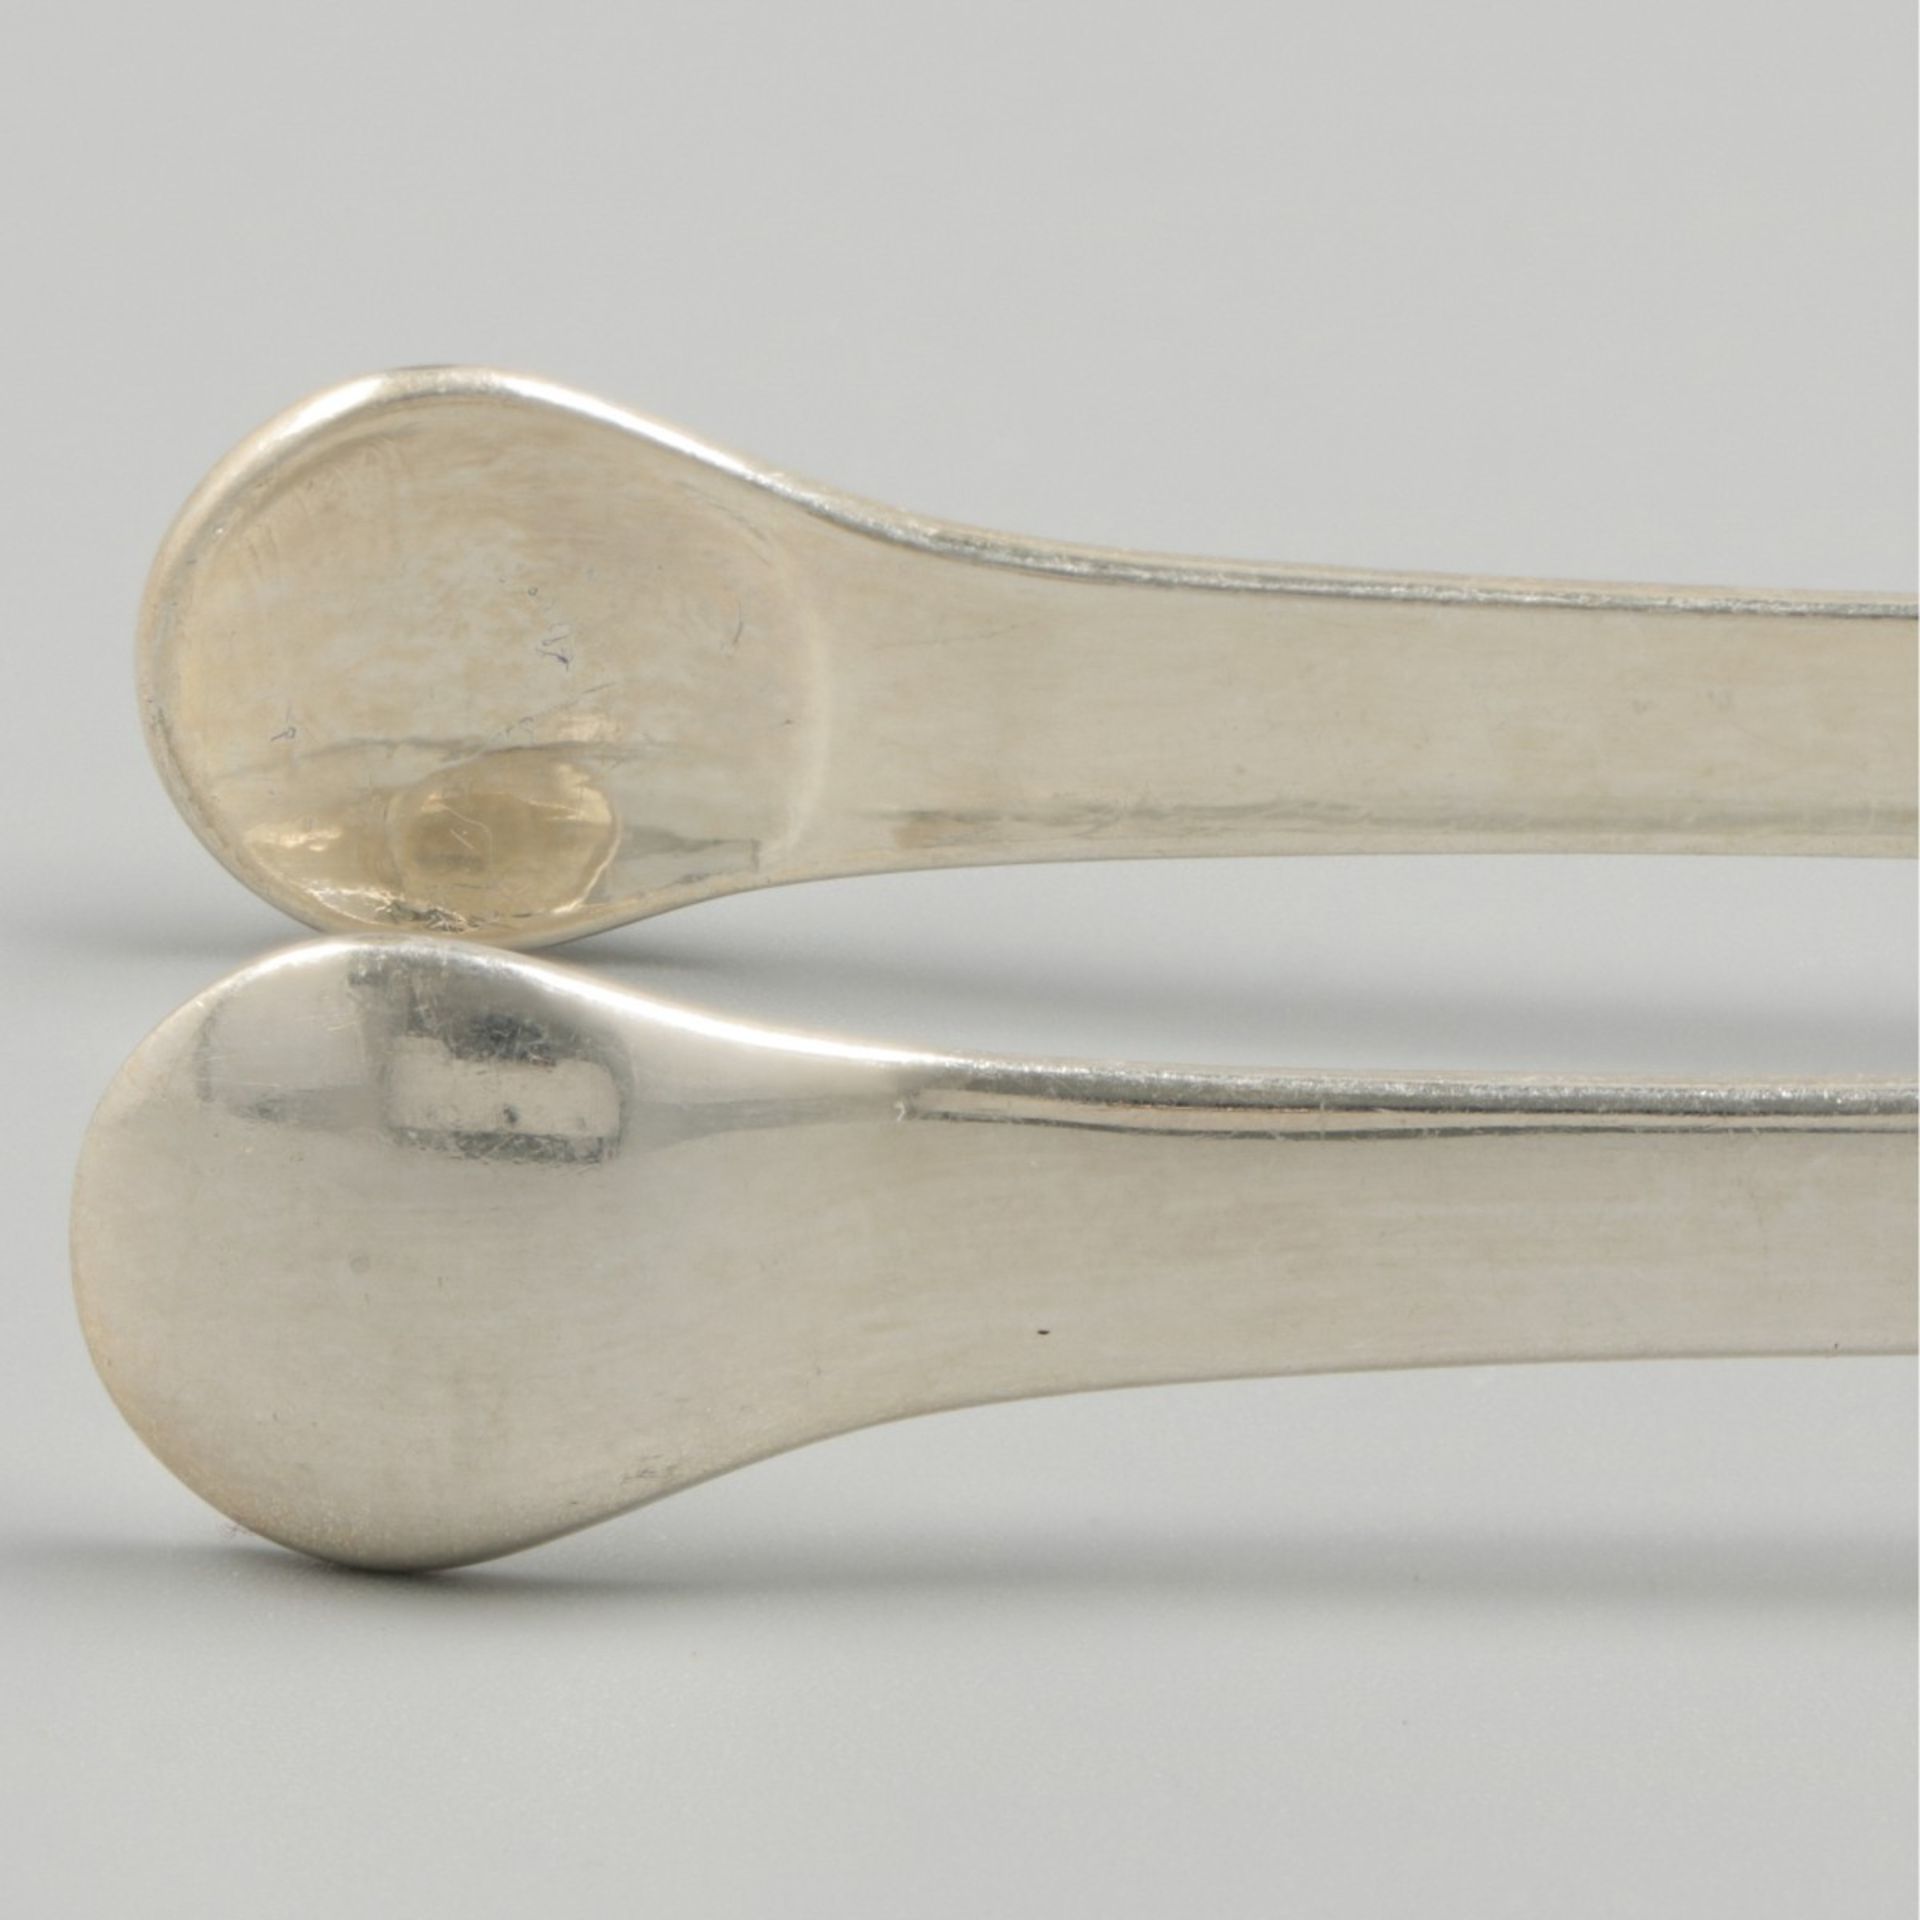 Sugar tongs (Gallia L'Alfenide) silver plated. - Image 4 of 5